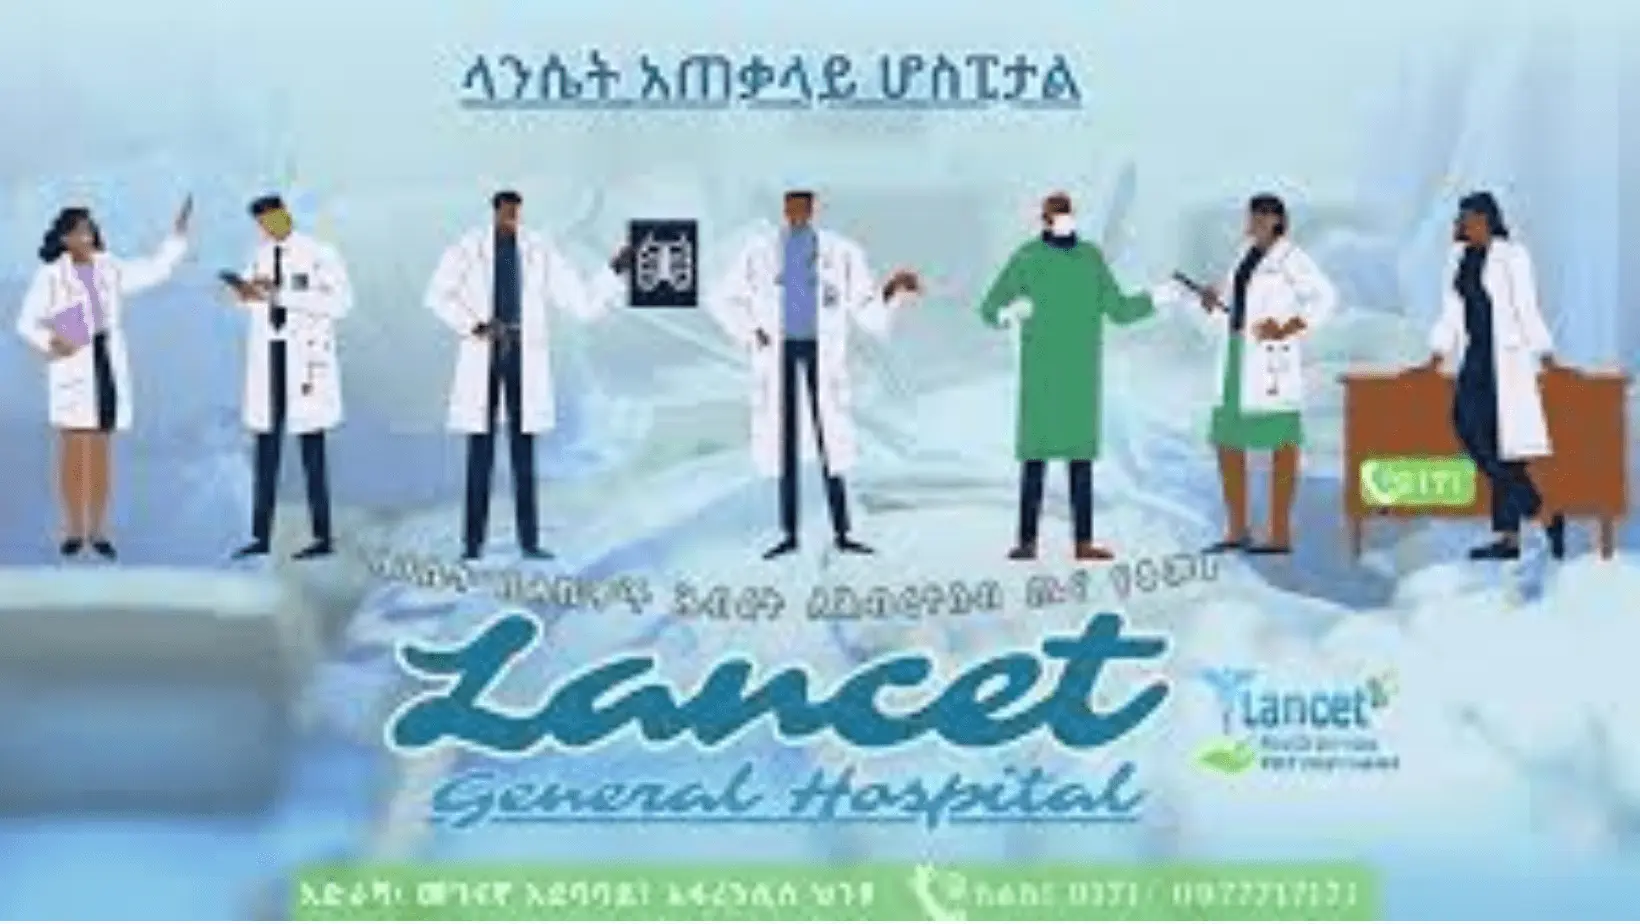 lancet general hospital featured image